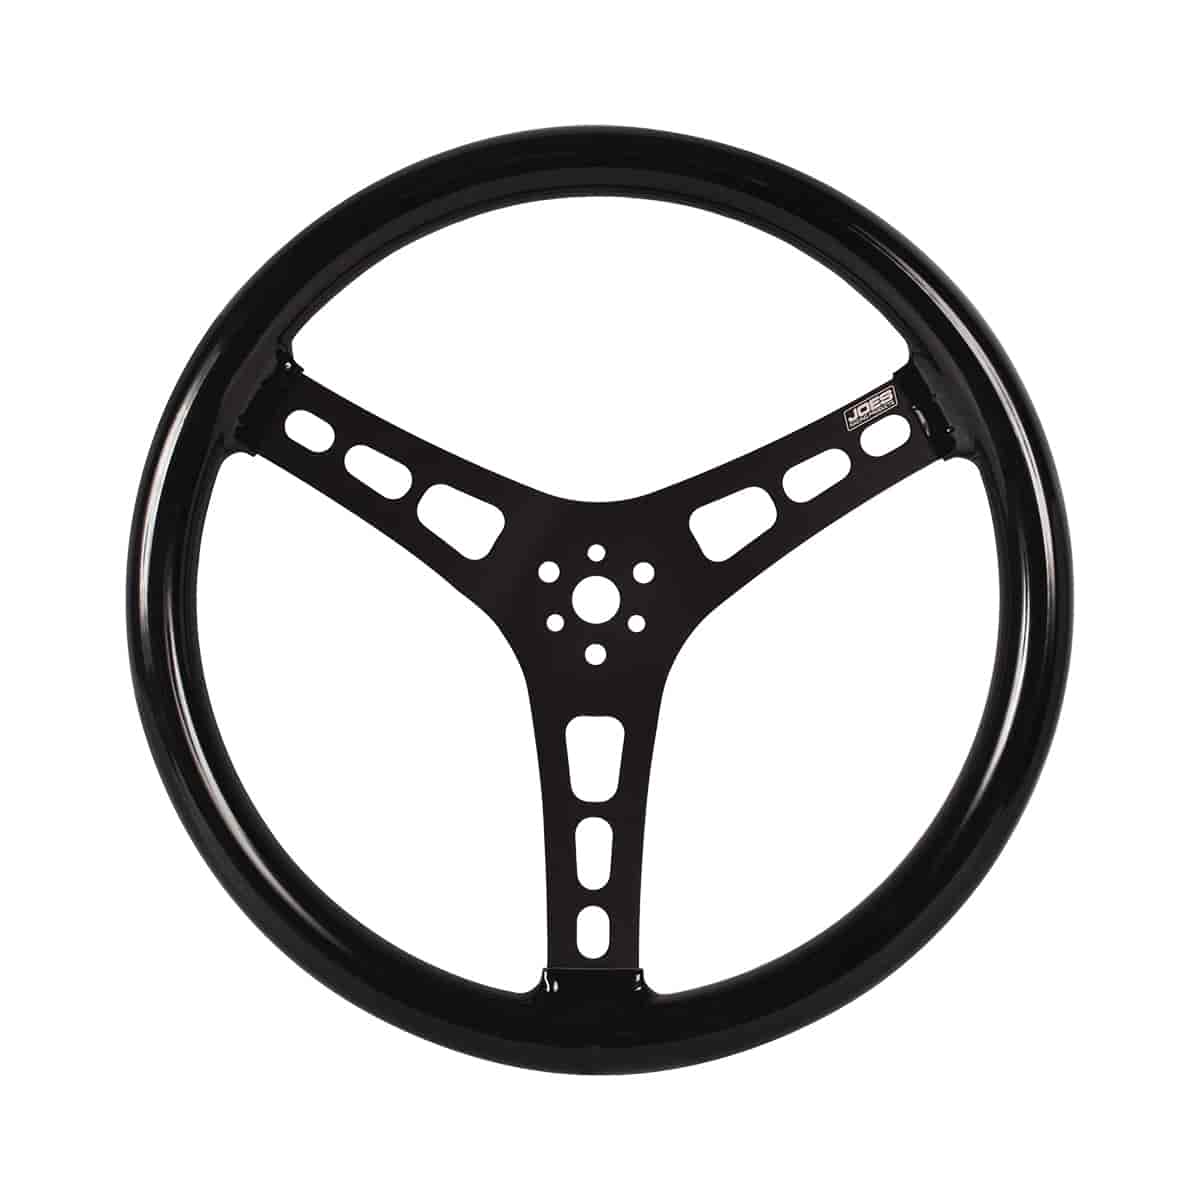 15 in. Flat Steering Wheel - Black Aluminum Rubber Coated